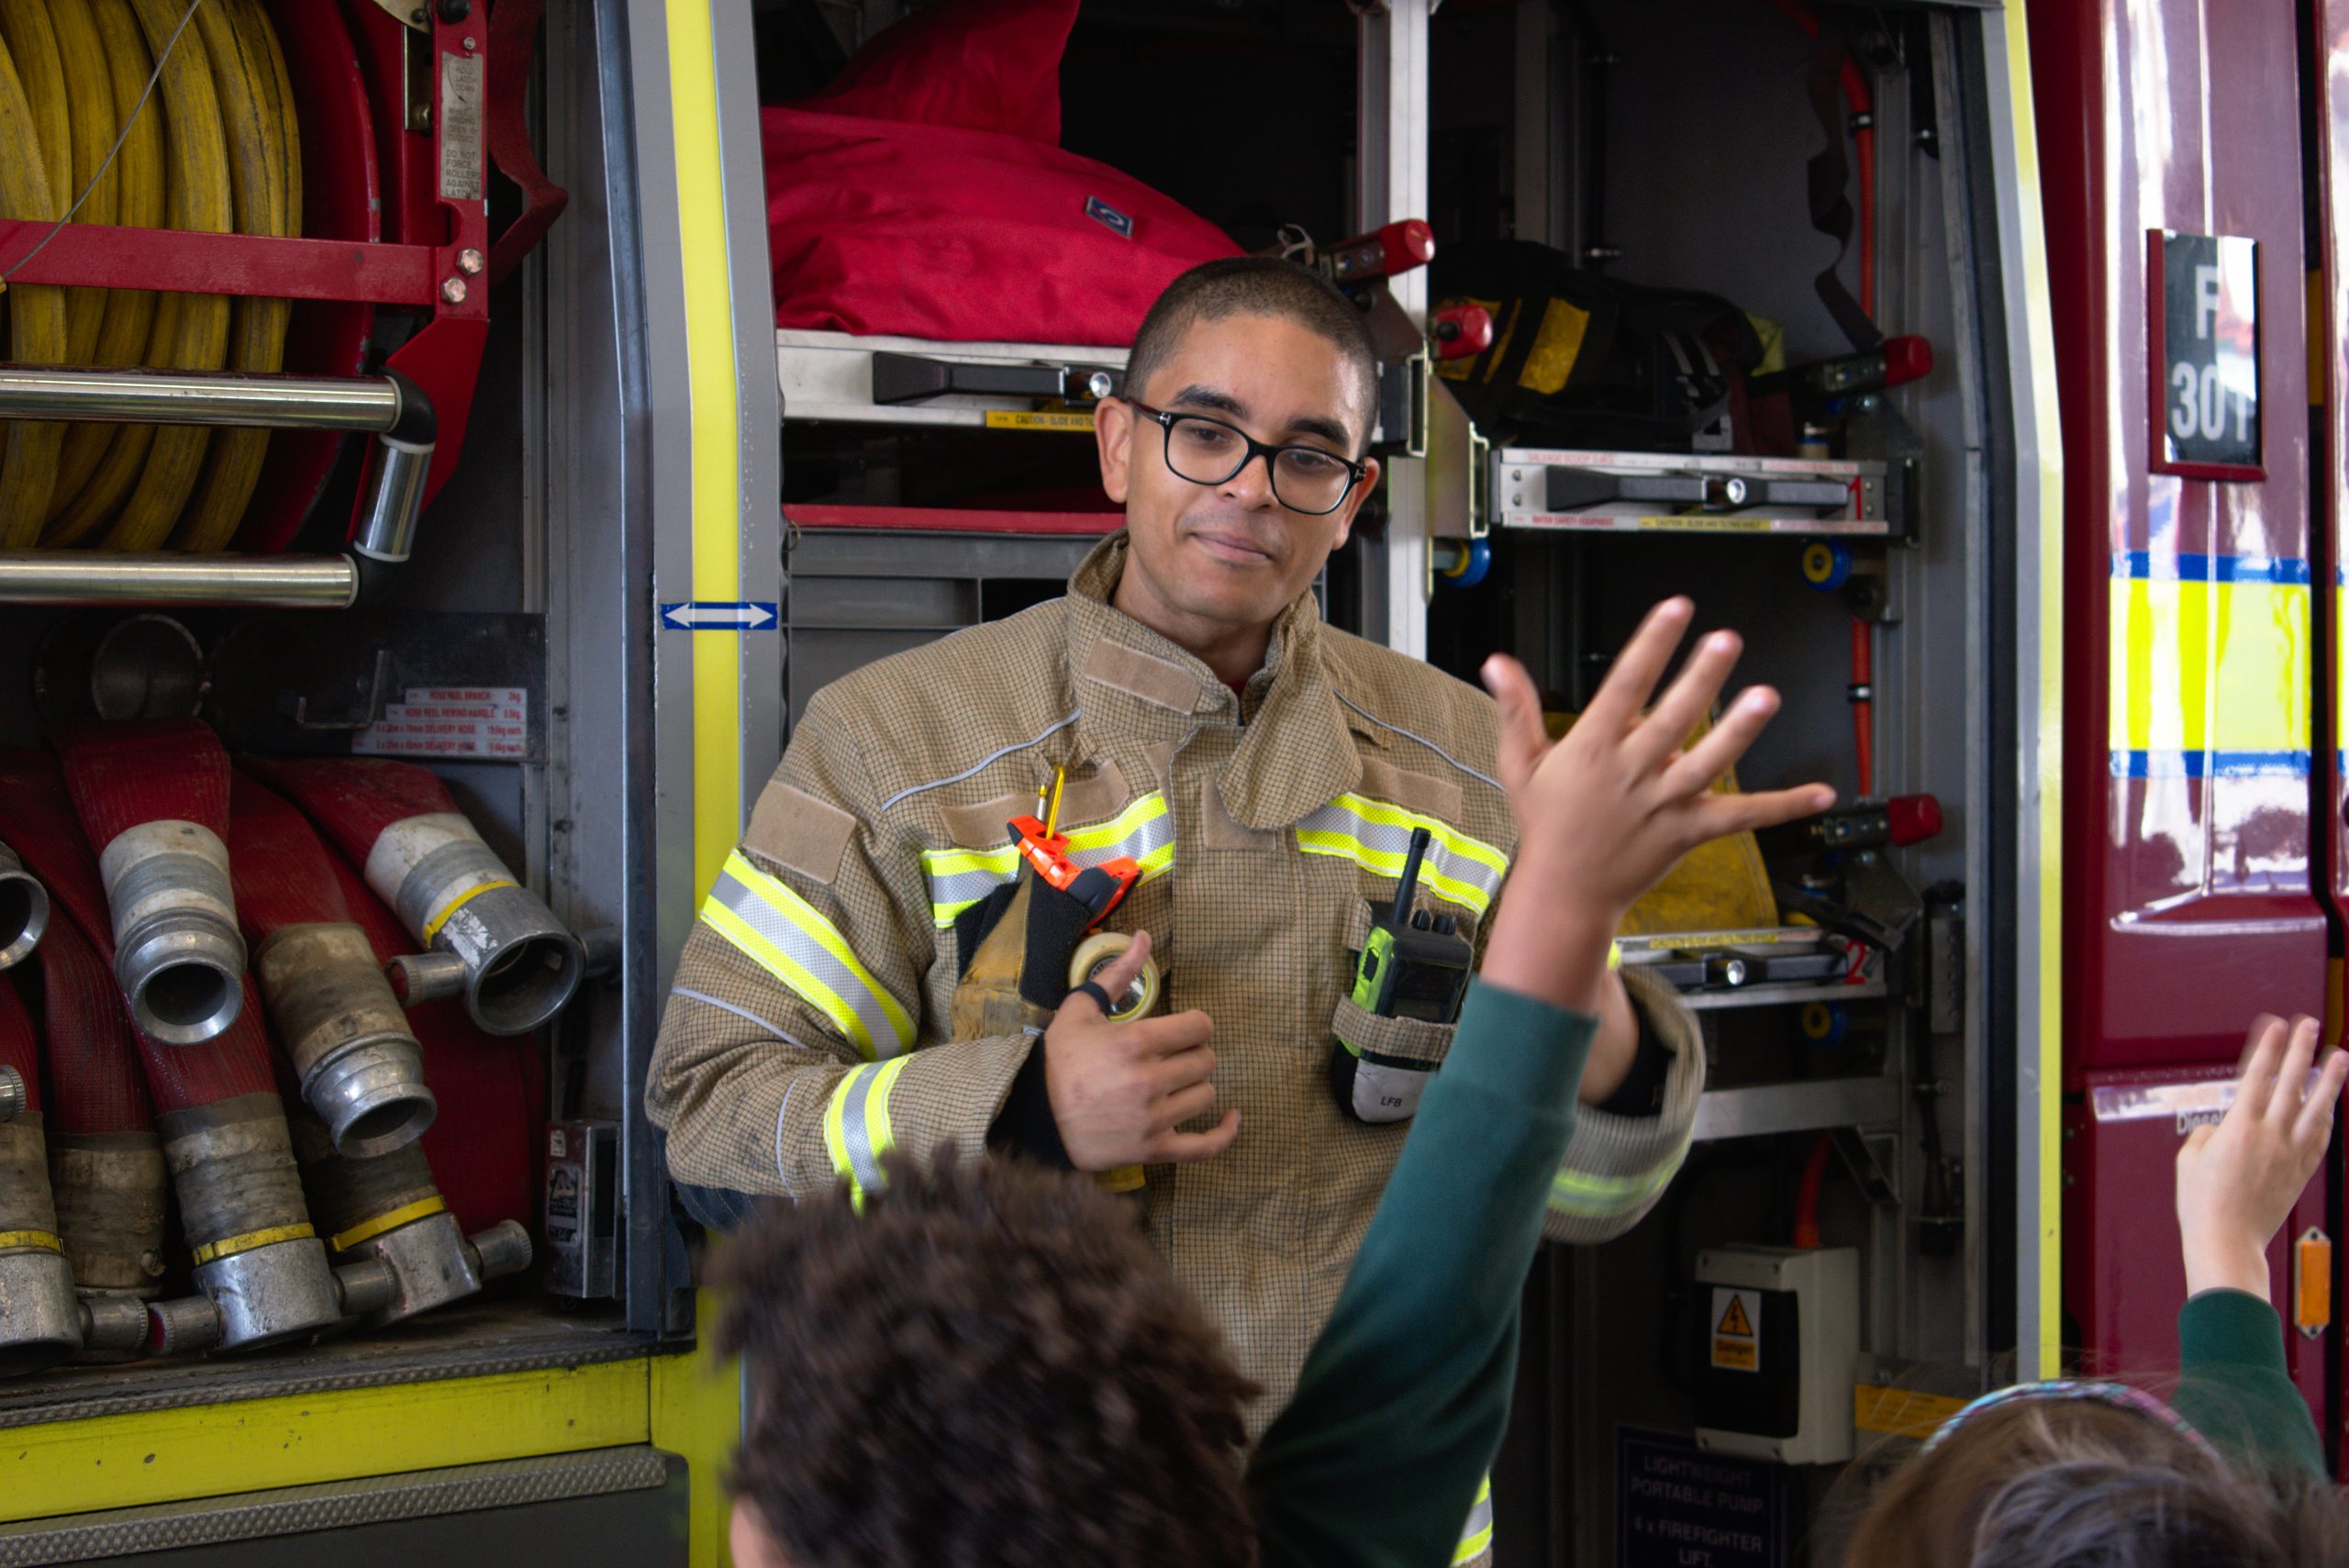 Firefighter teaching children